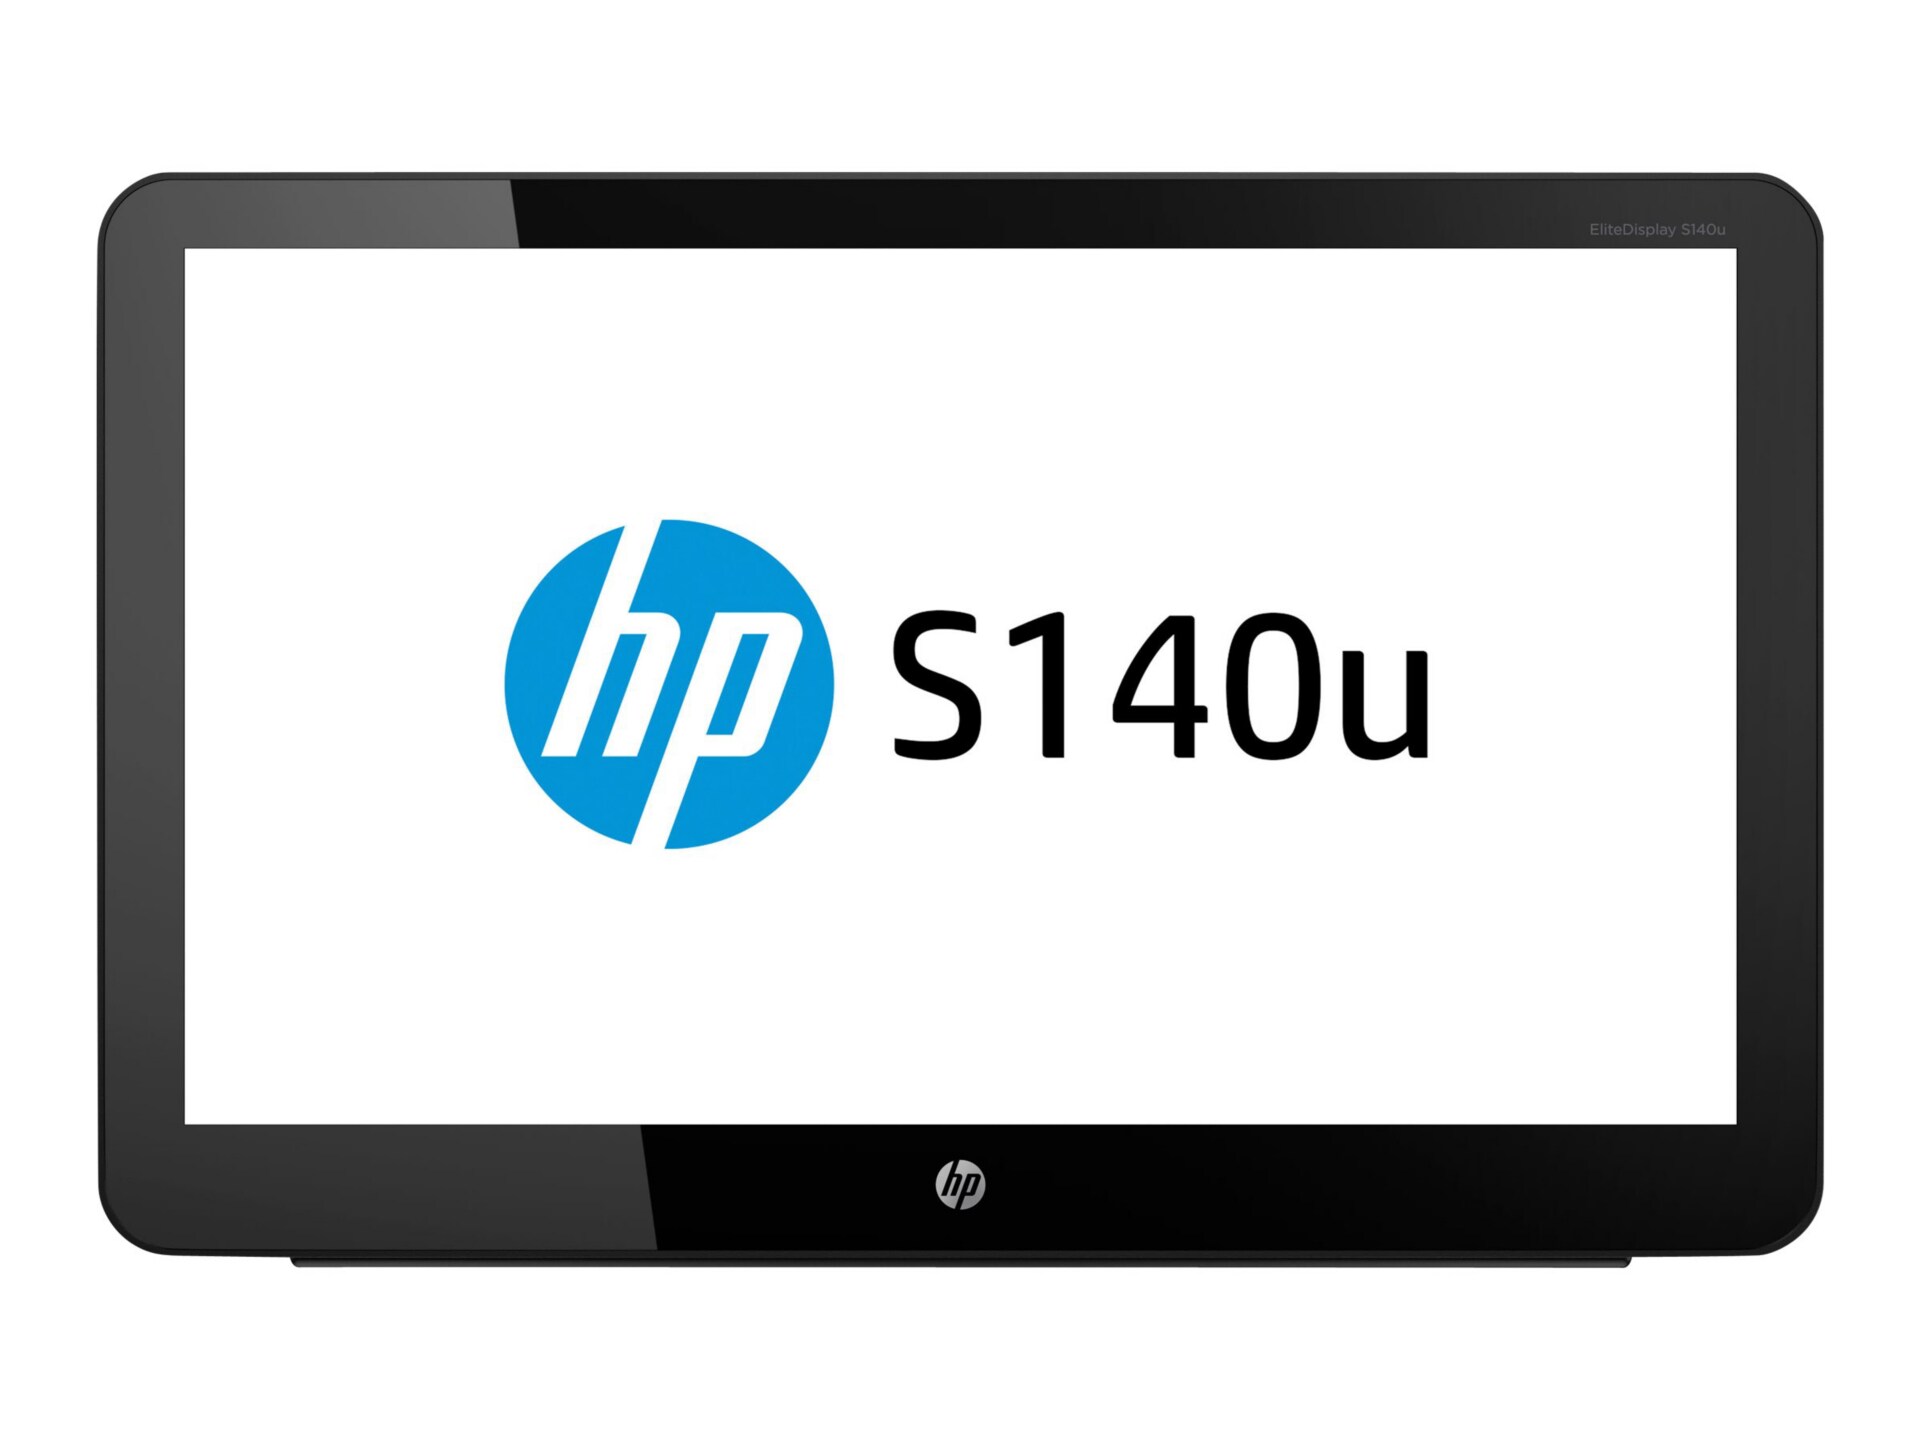 HP EliteDisplay S140u - LED monitor - 14"